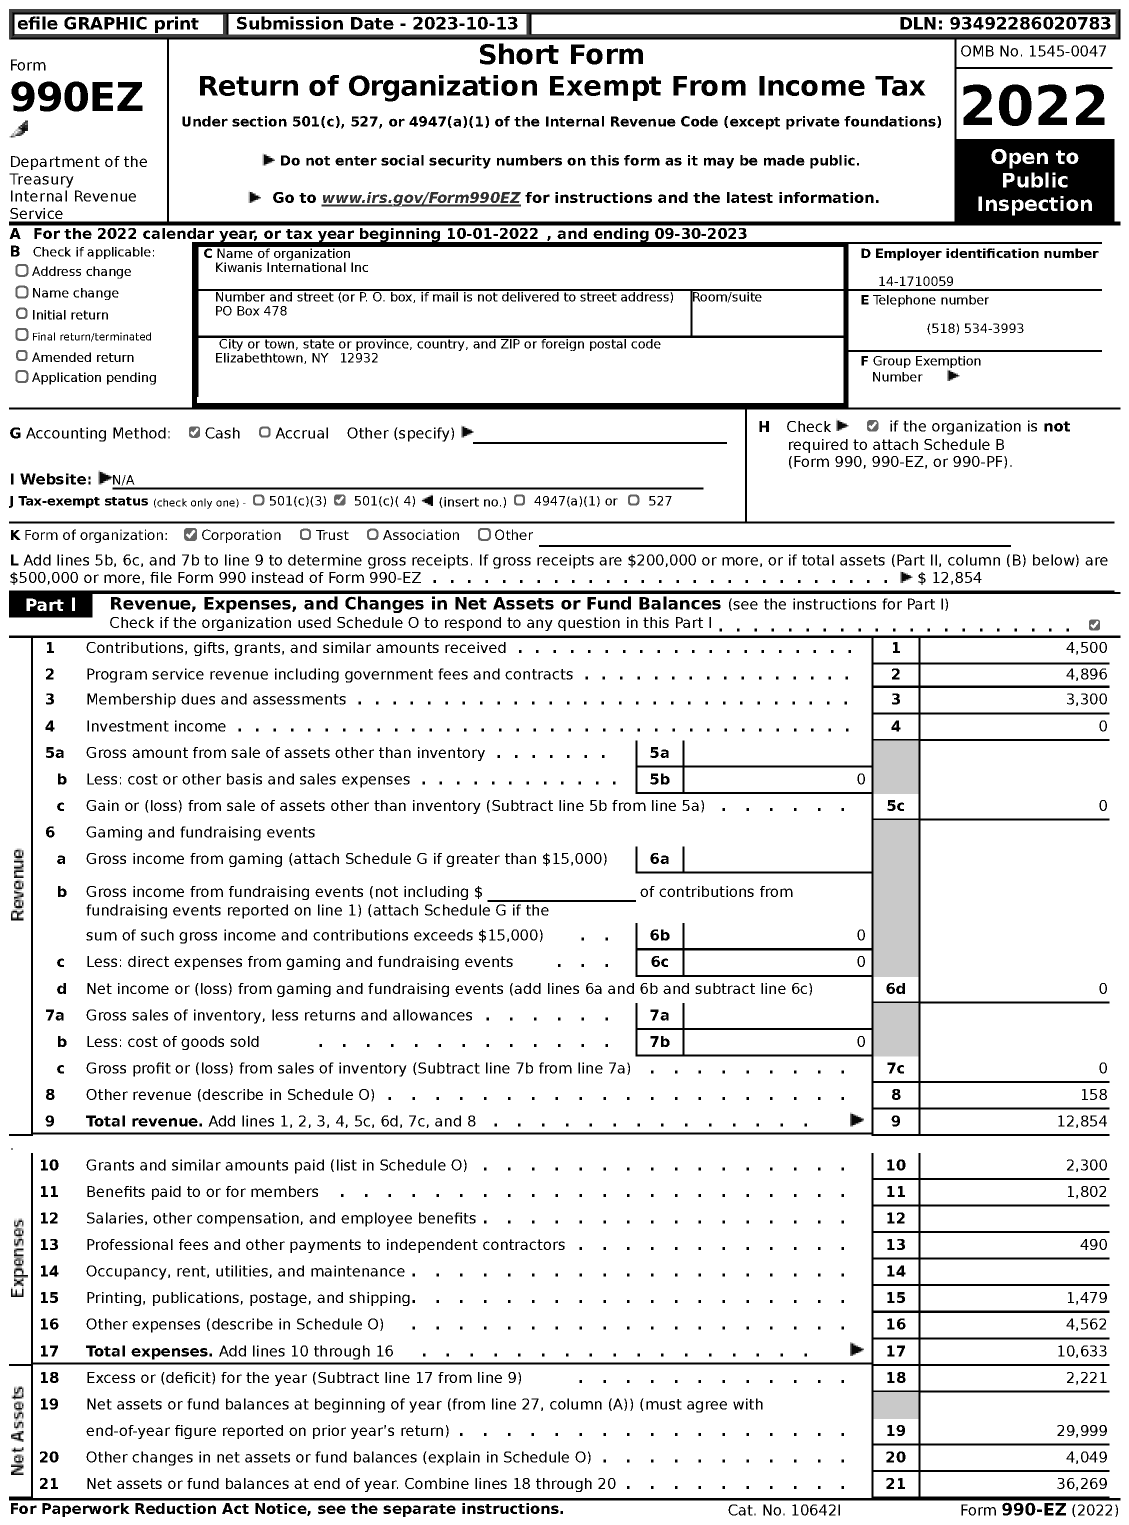 Image of first page of 2022 Form 990EZ for Kiwanis International - K02233 Elizabethtown